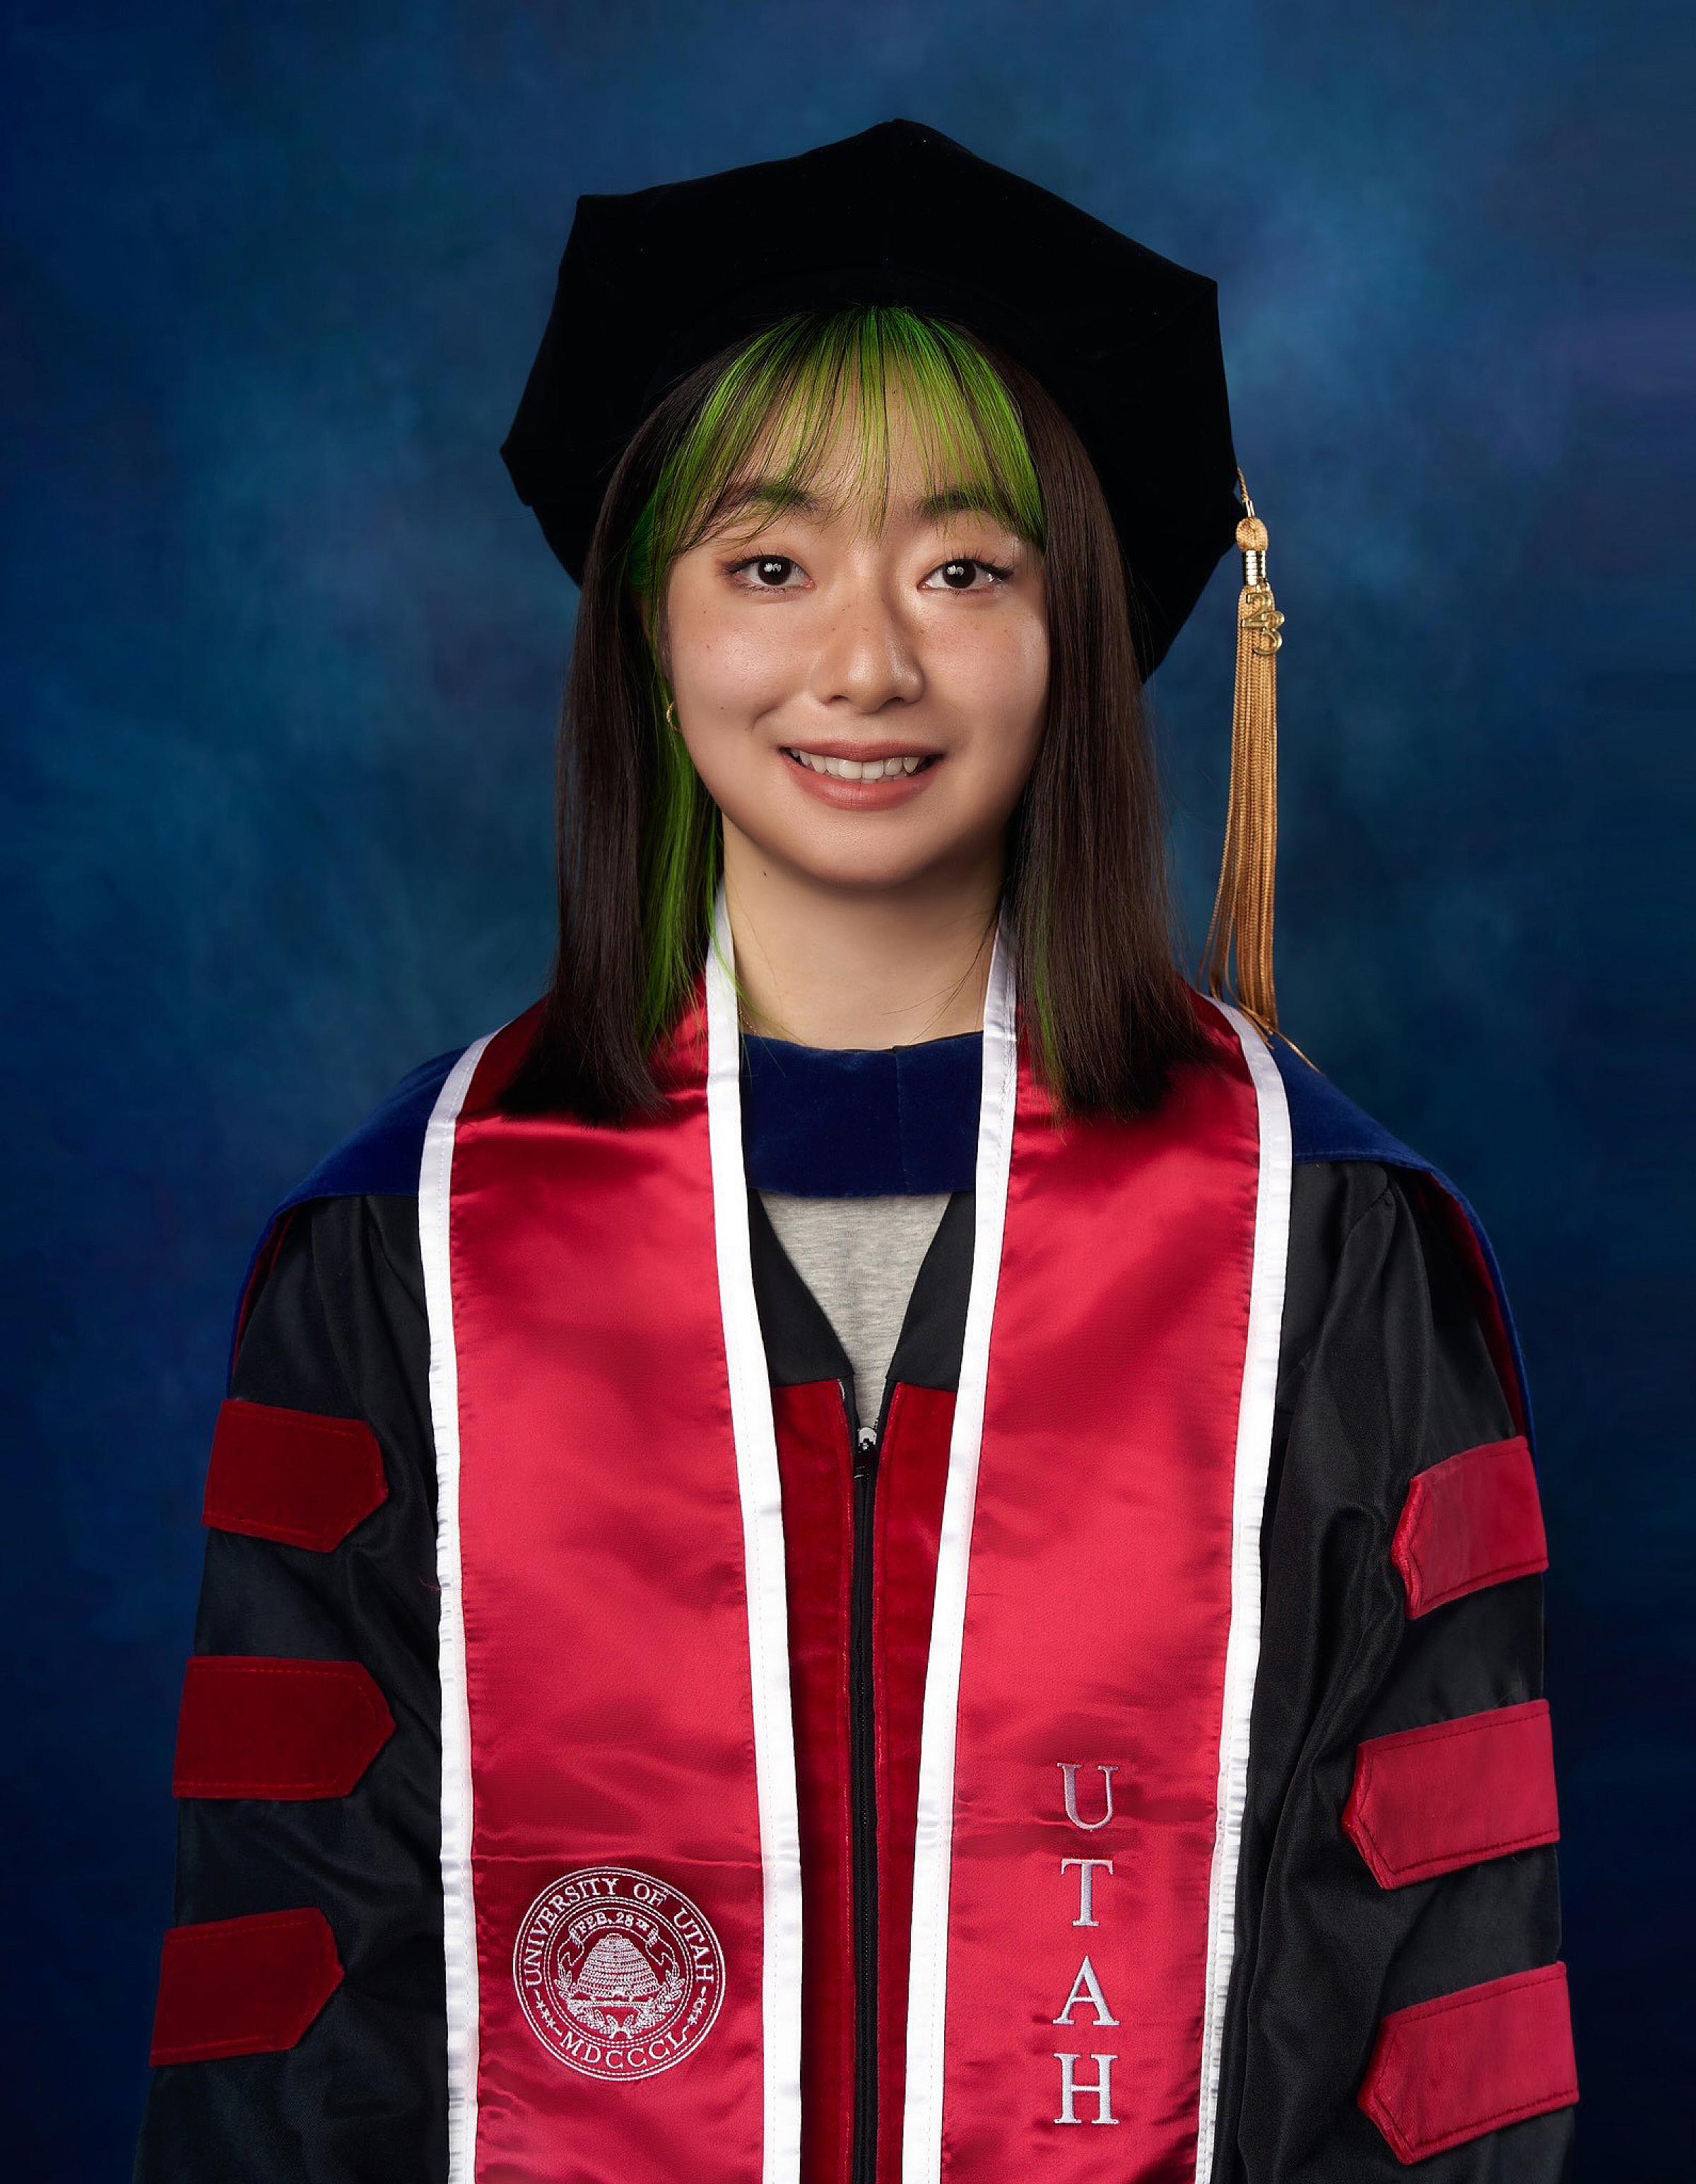 Siqi Hu wearing a graduation cap and robe